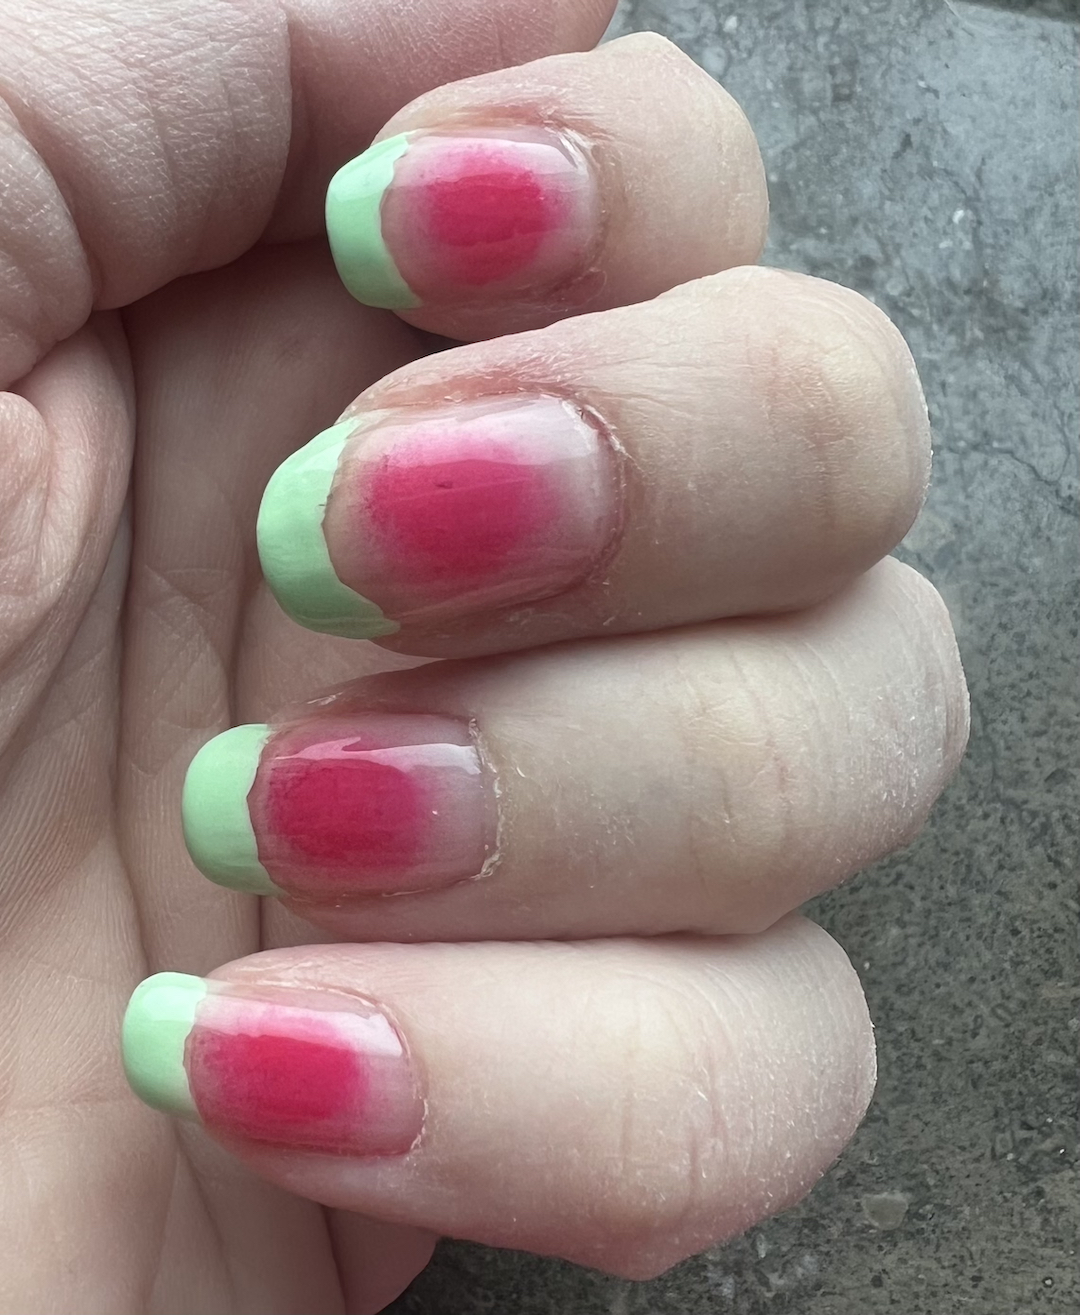 watermelon nails